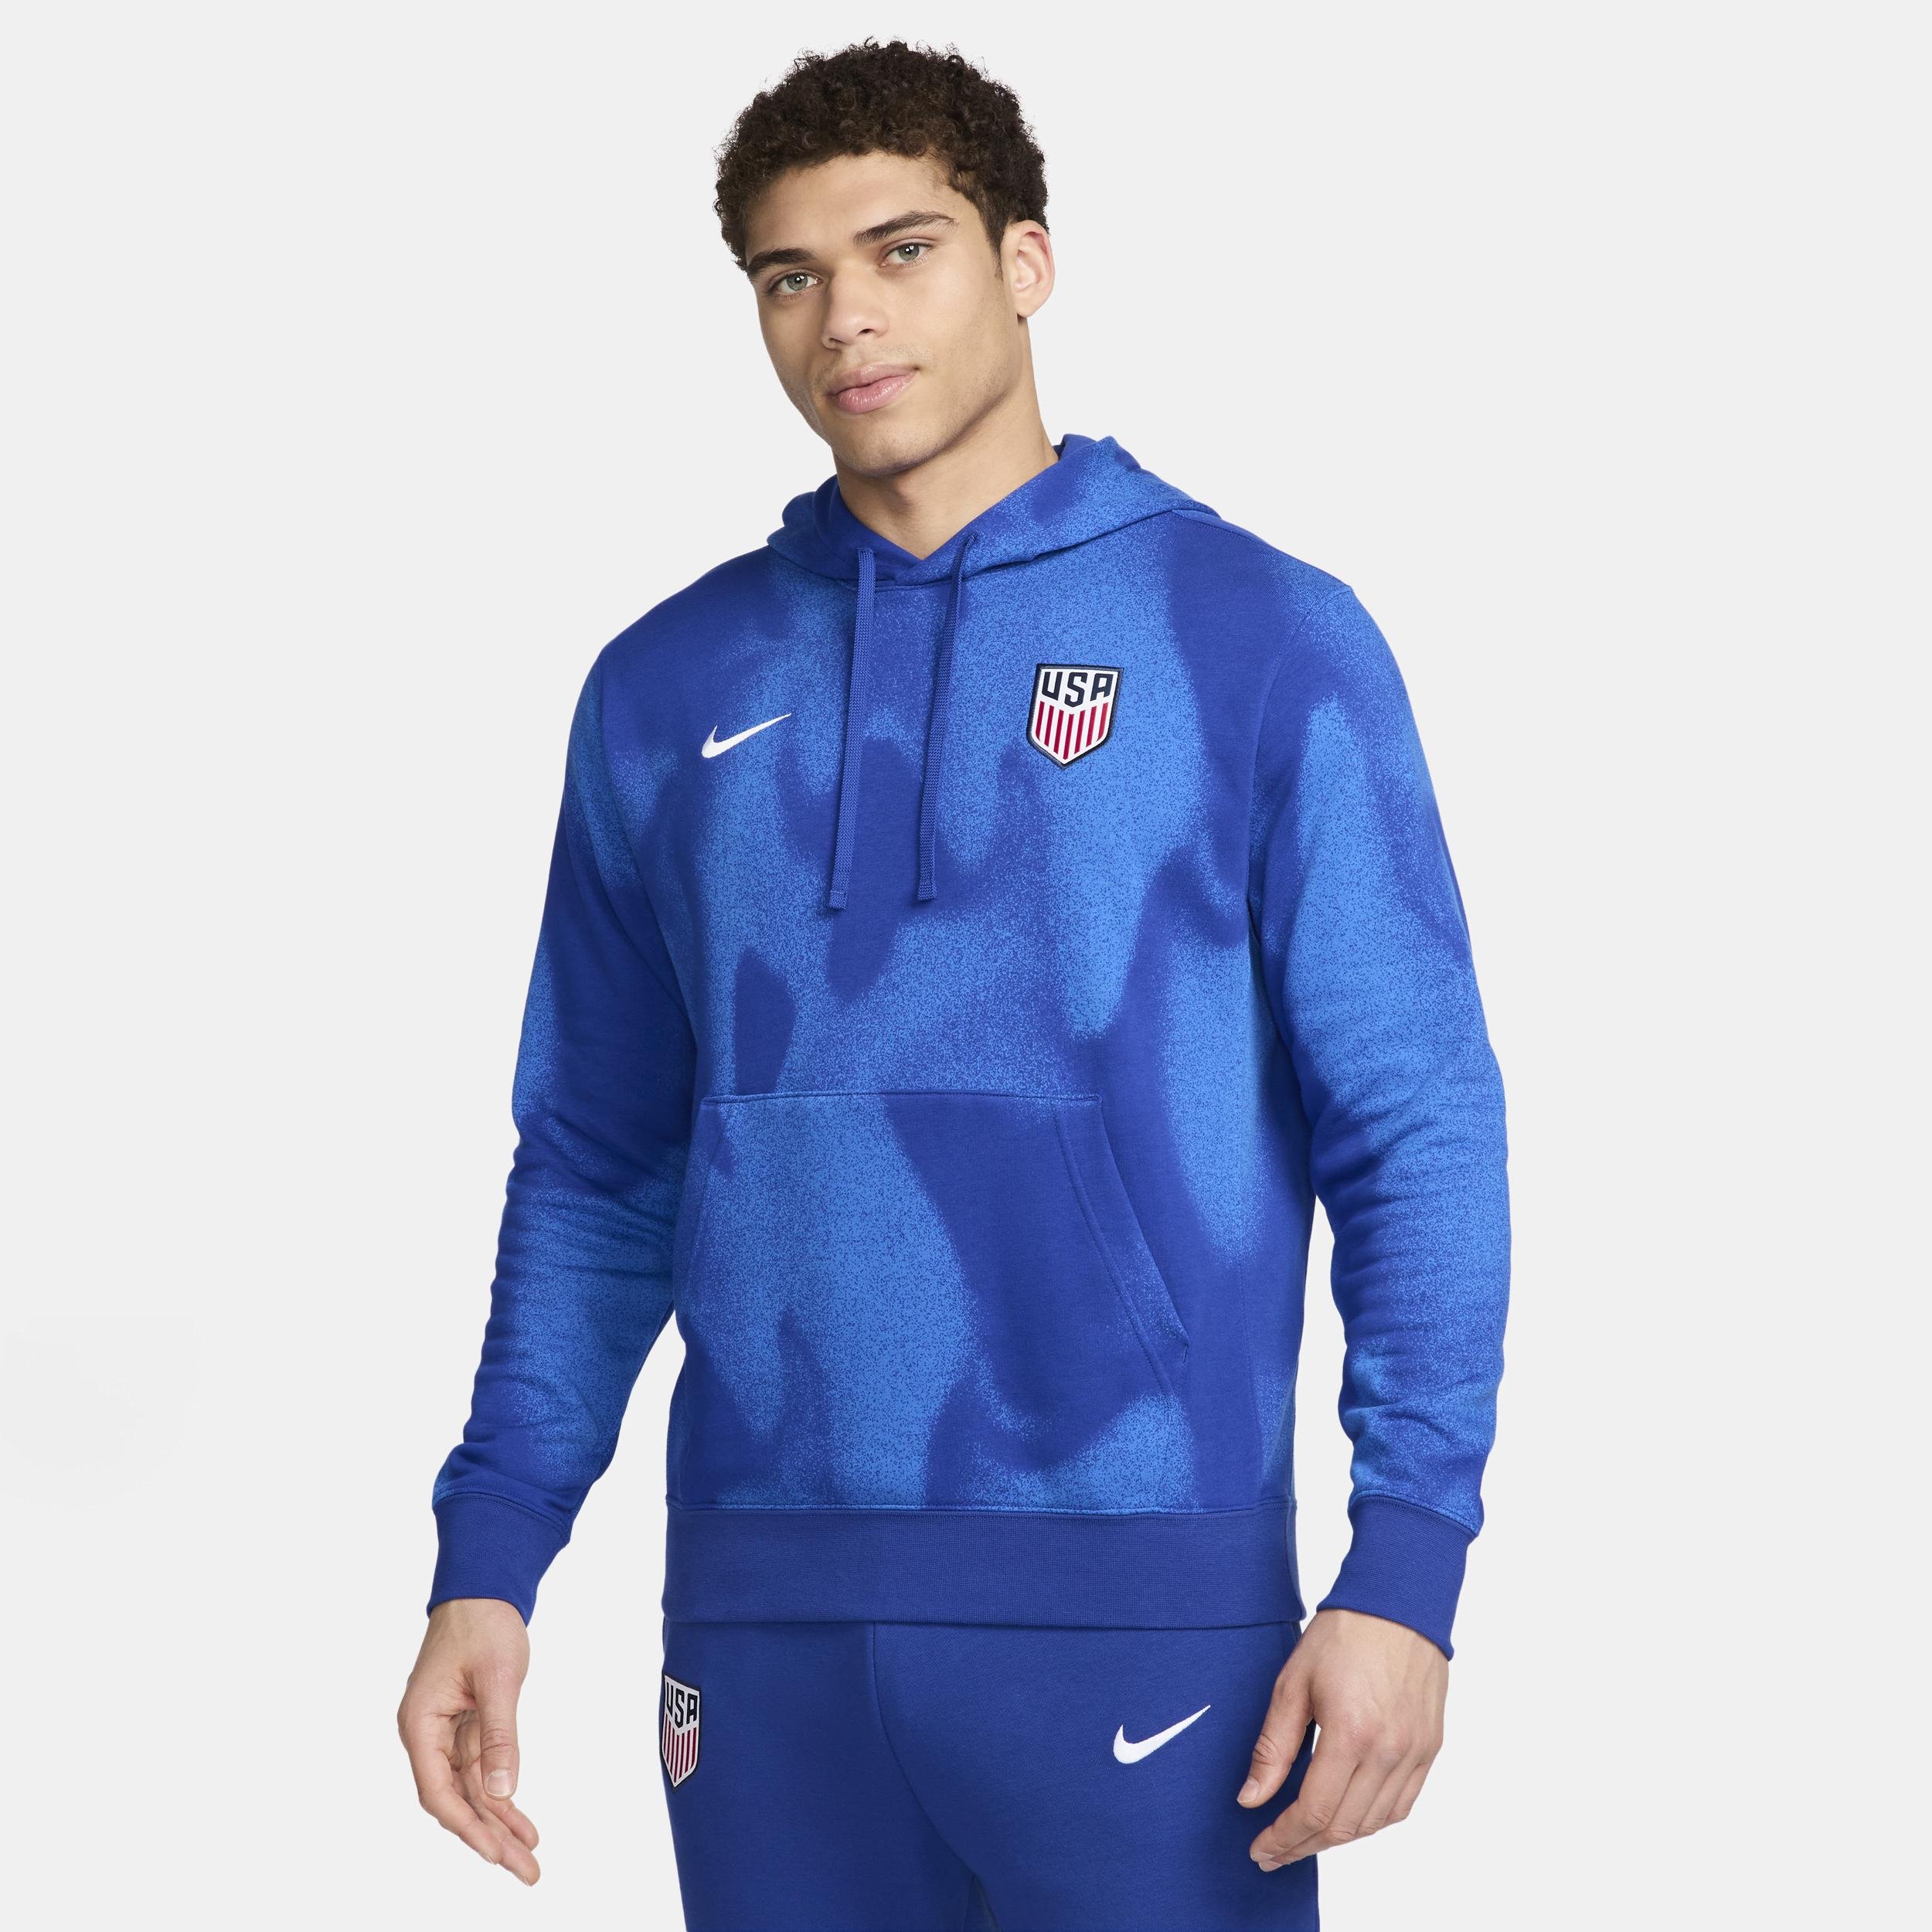 USMNT Club Nike Men's Soccer Pullover Hoodie by NIKE